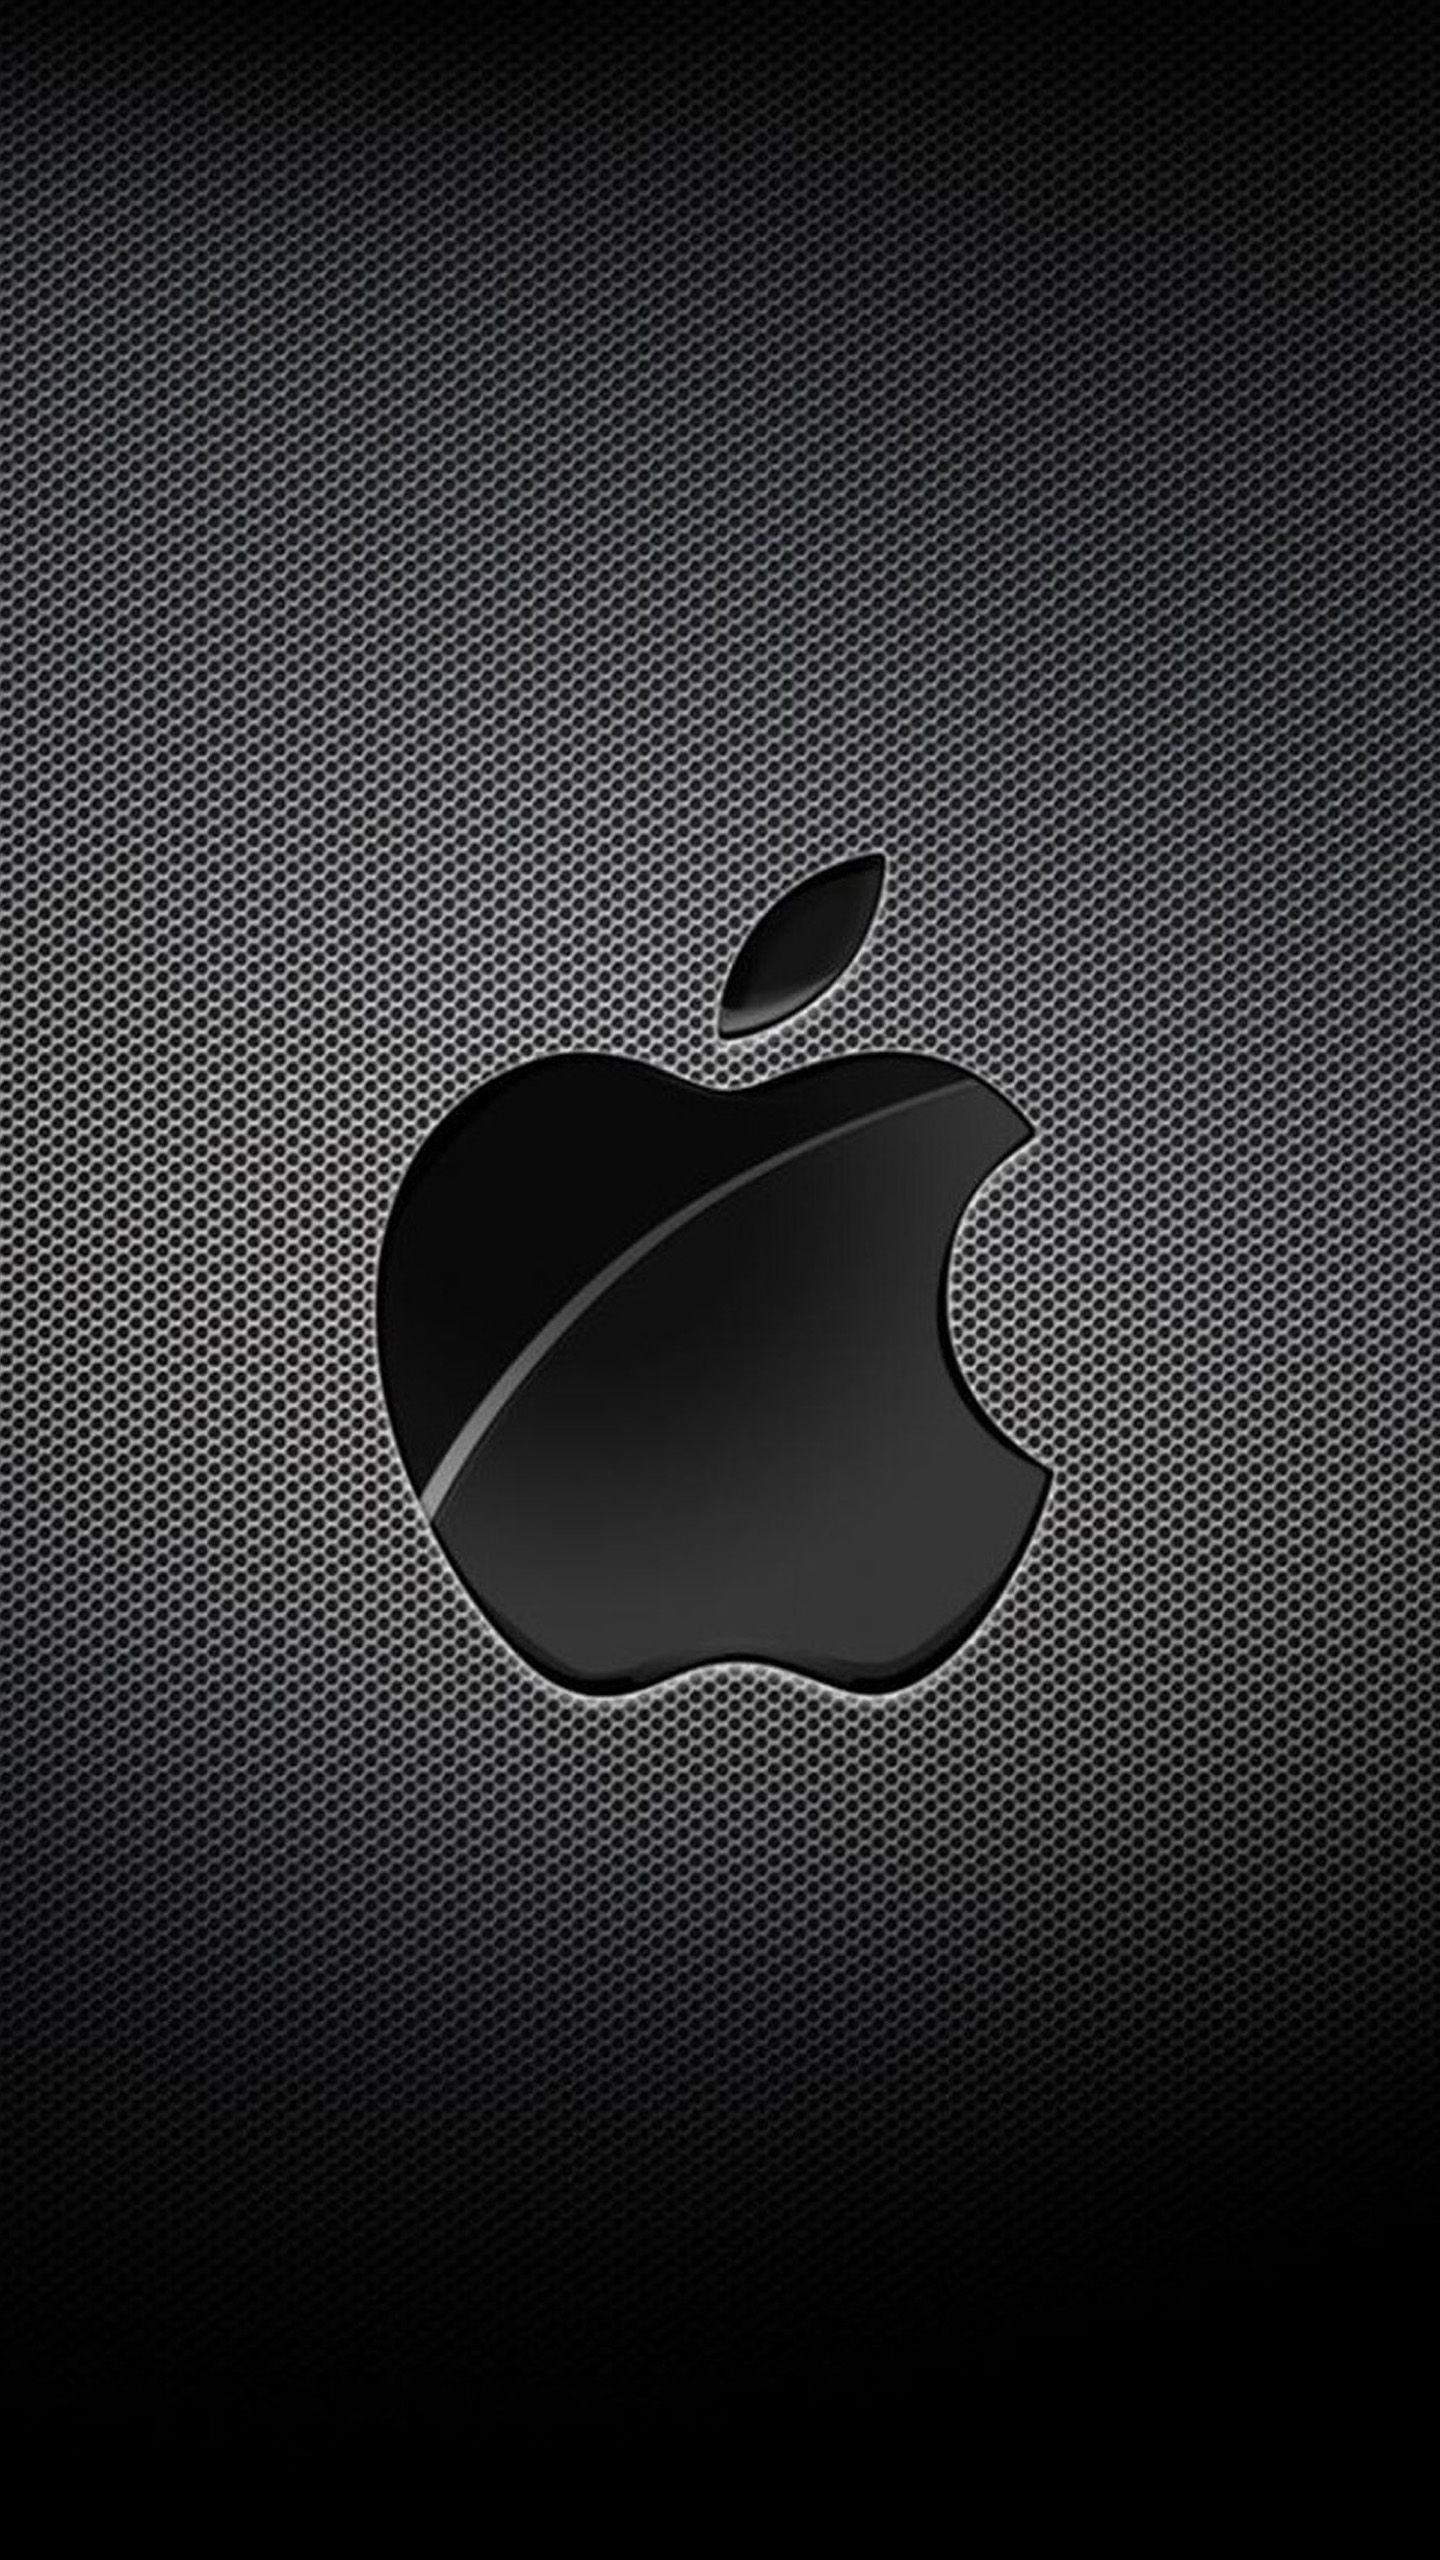 Black Apple logo 1 Galaxy S6 Wallpaper. Galaxy S6 Background